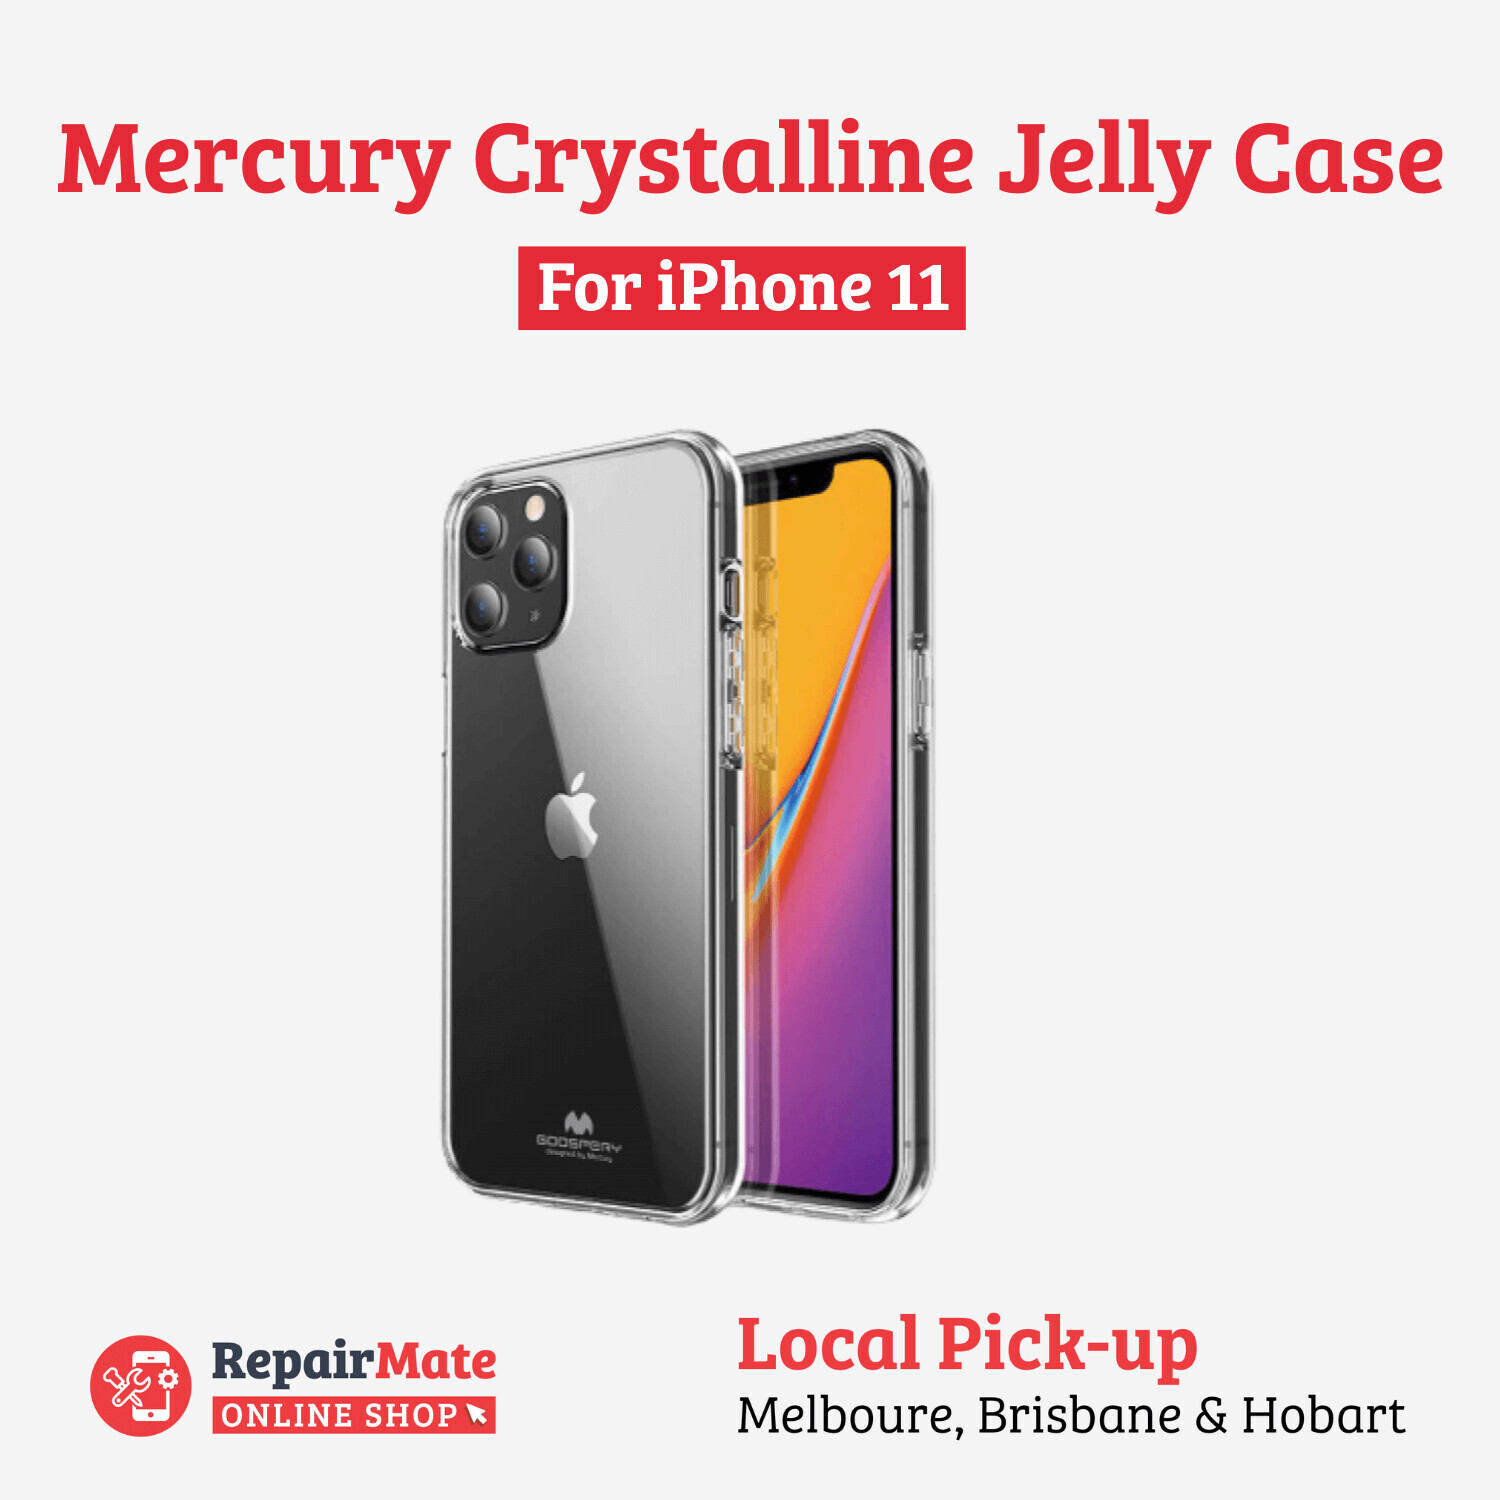 iPhone 11 Mercury Crystalline Jelly Case Cover